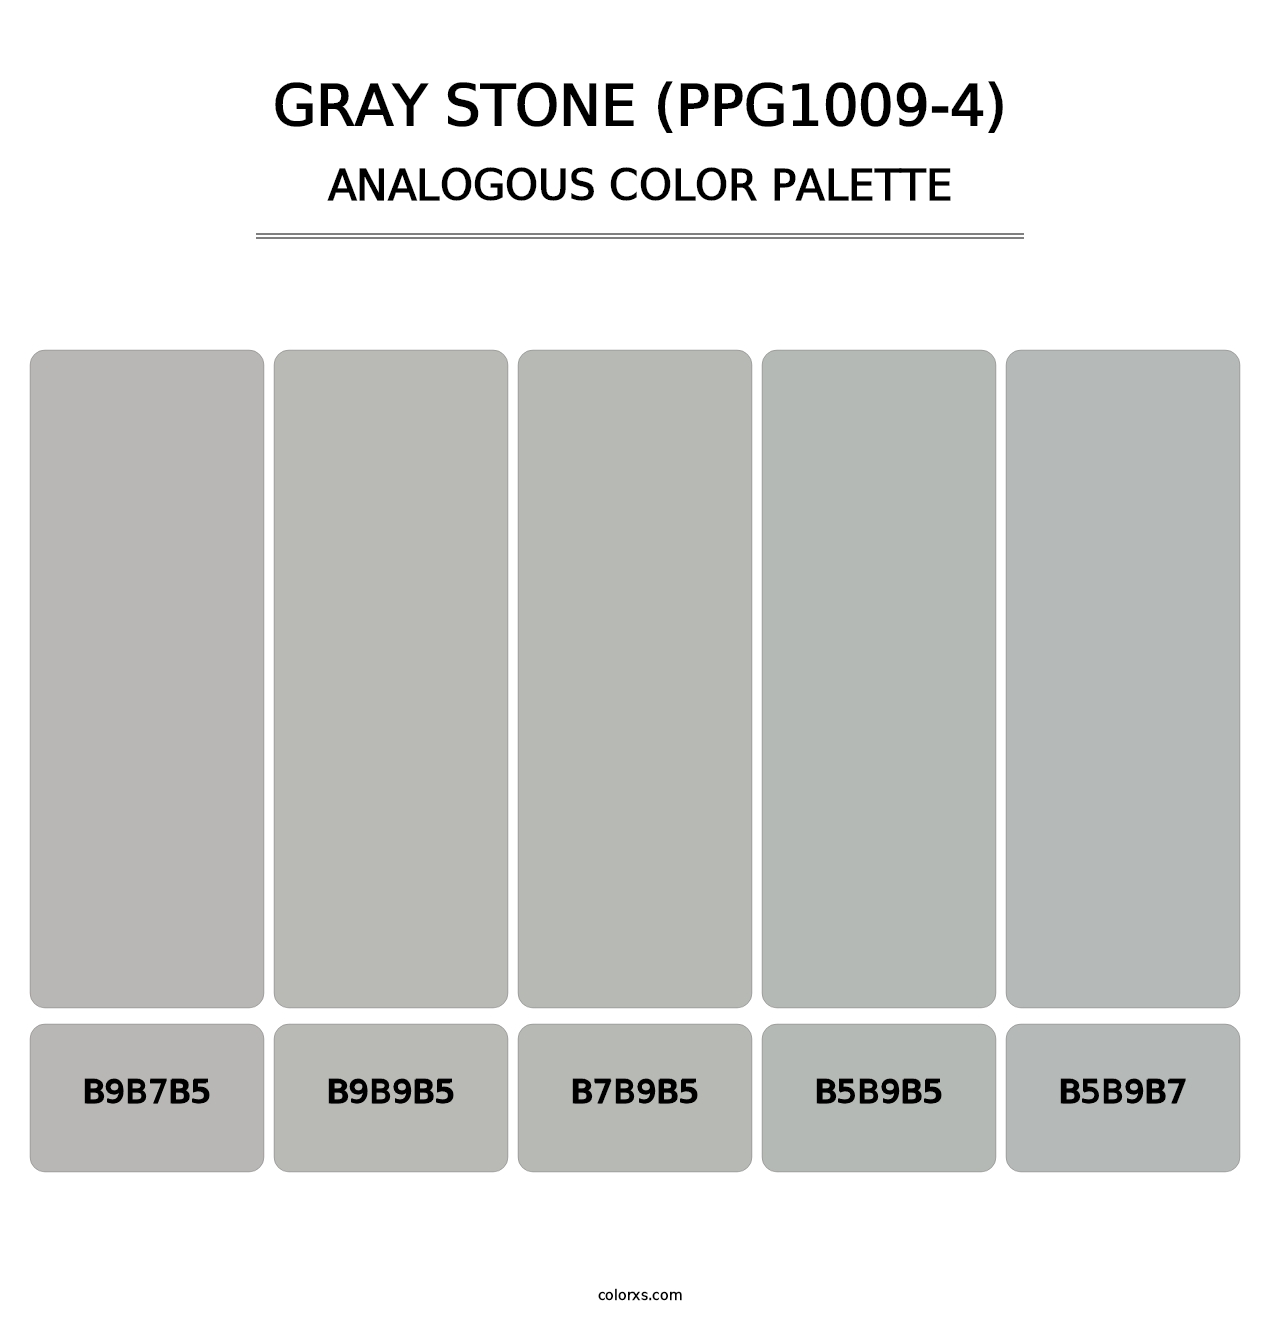 Gray Stone (PPG1009-4) - Analogous Color Palette